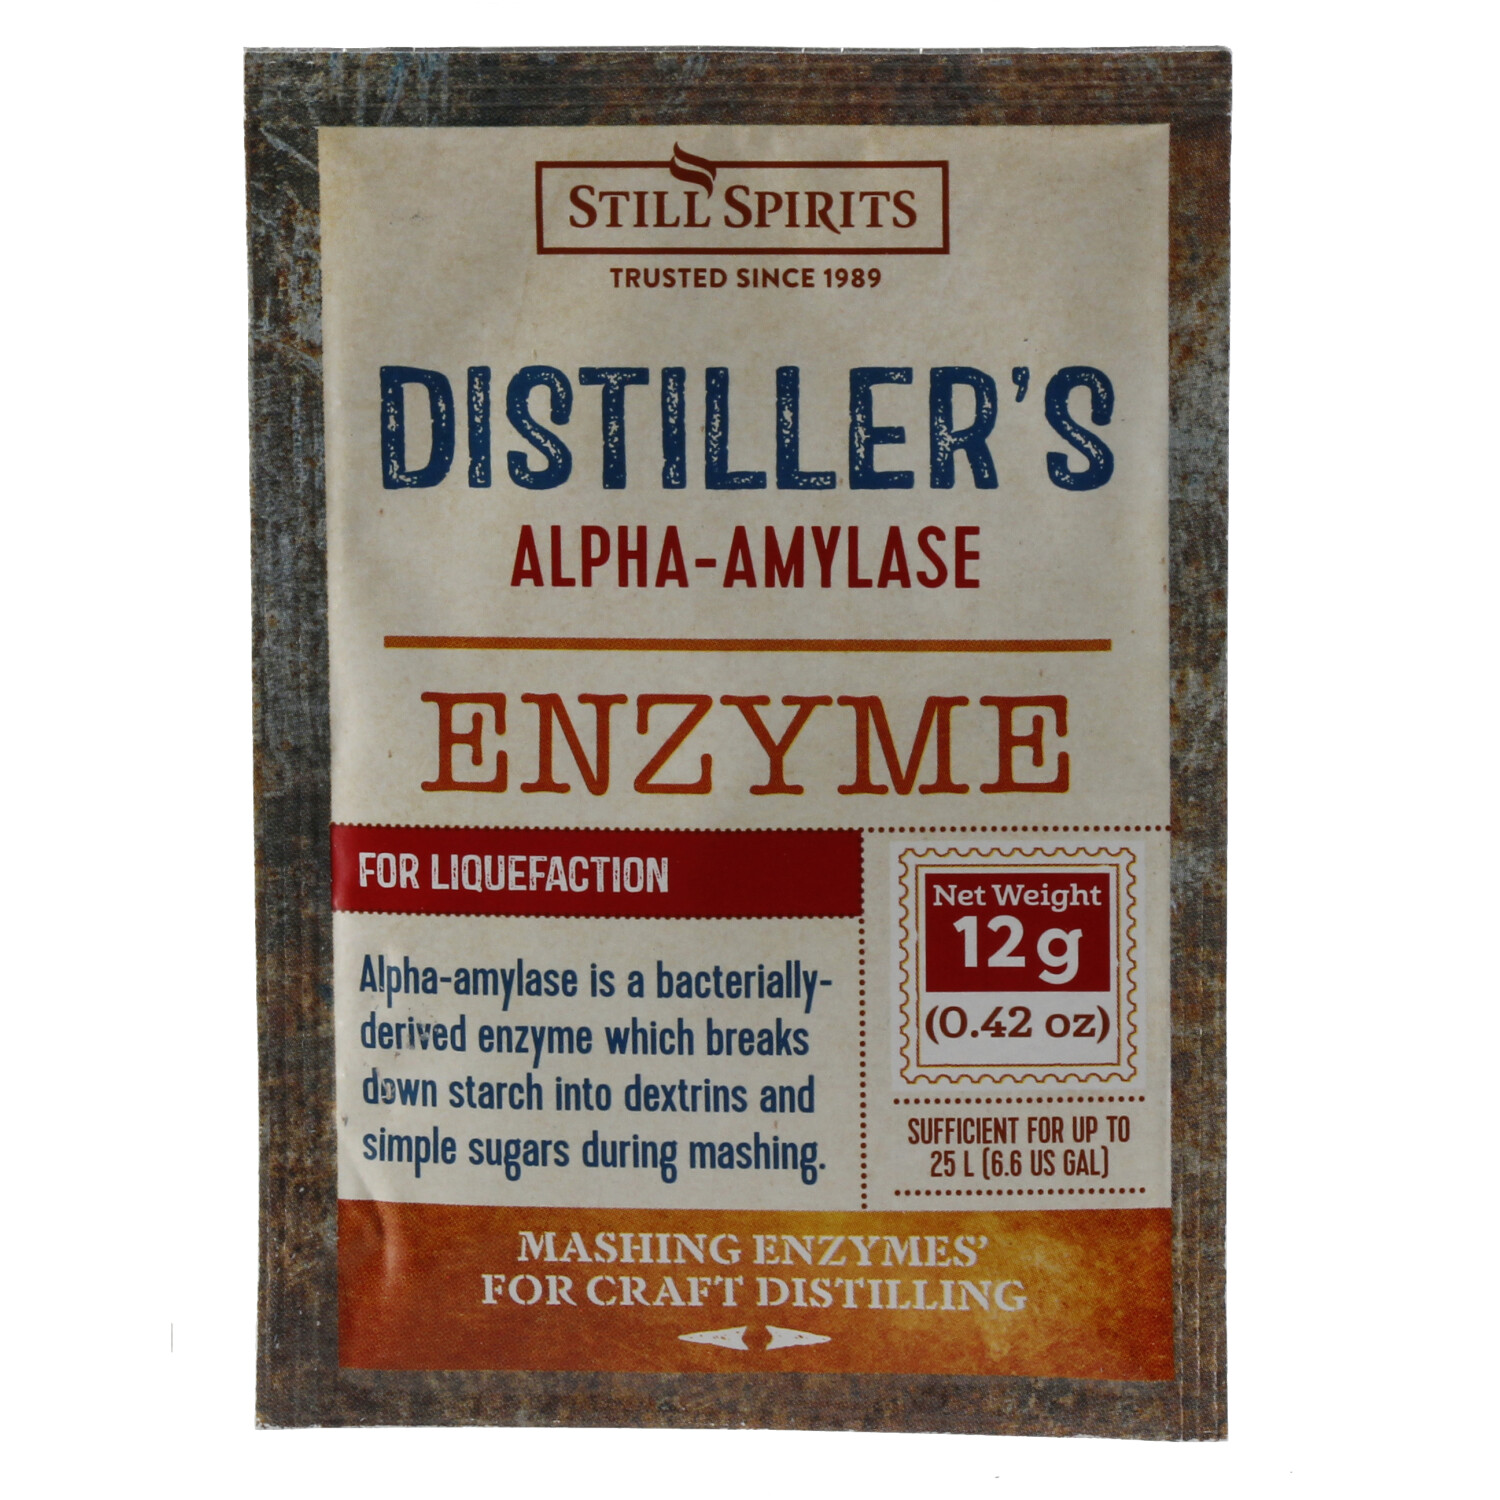 Still Spirits Distiller's Alpha-Amylase Enzyme 12 g